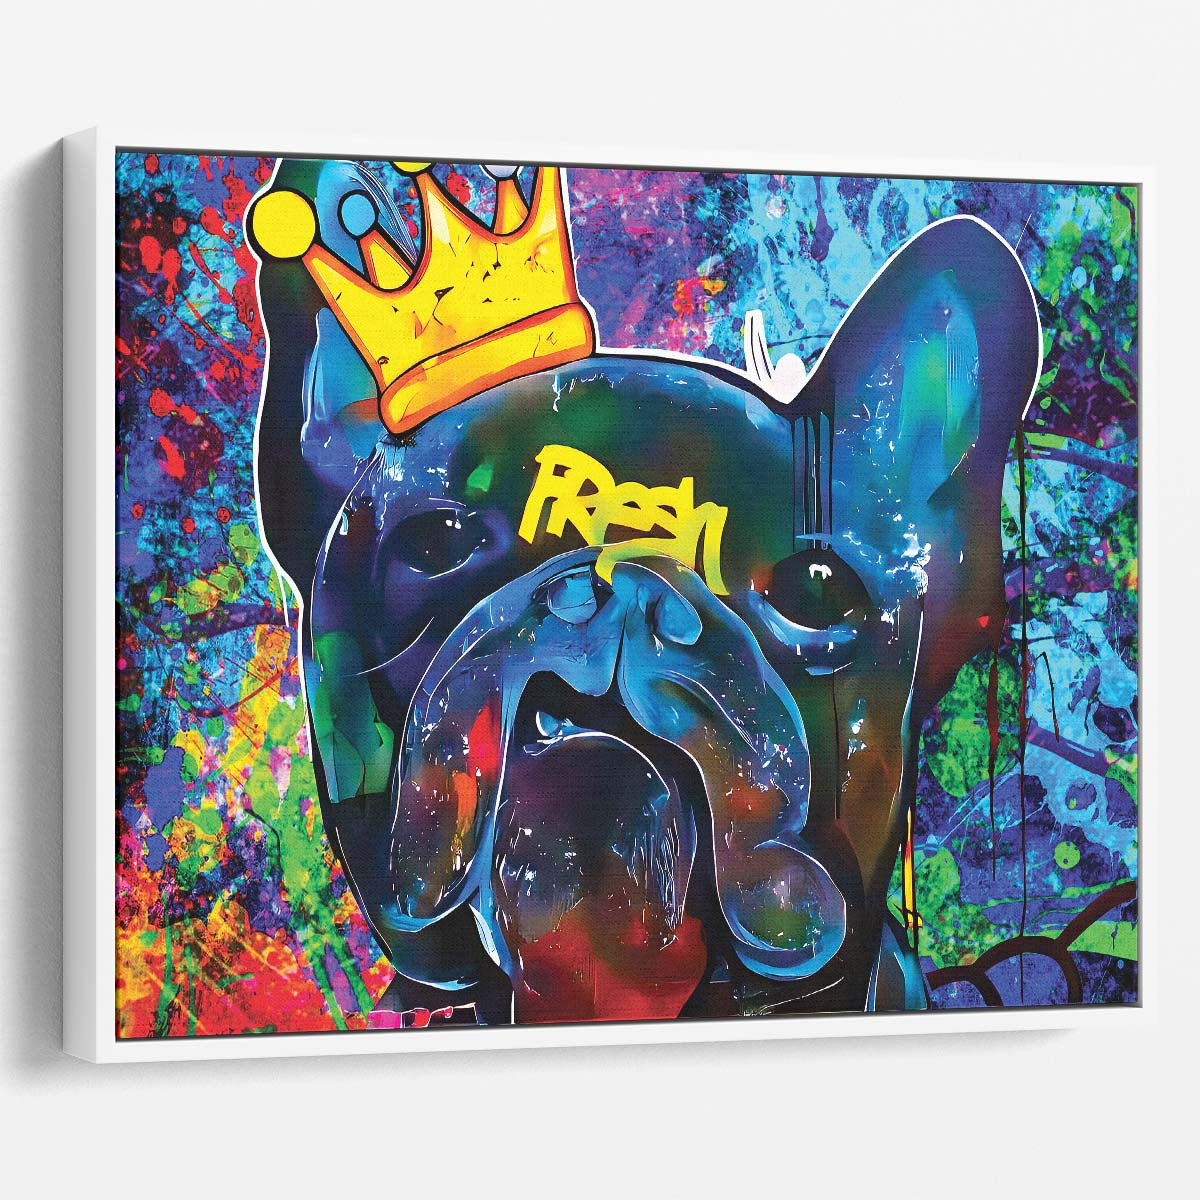 King Bulldog Graffiti Wall Art by Luxuriance Designs. Made in USA.